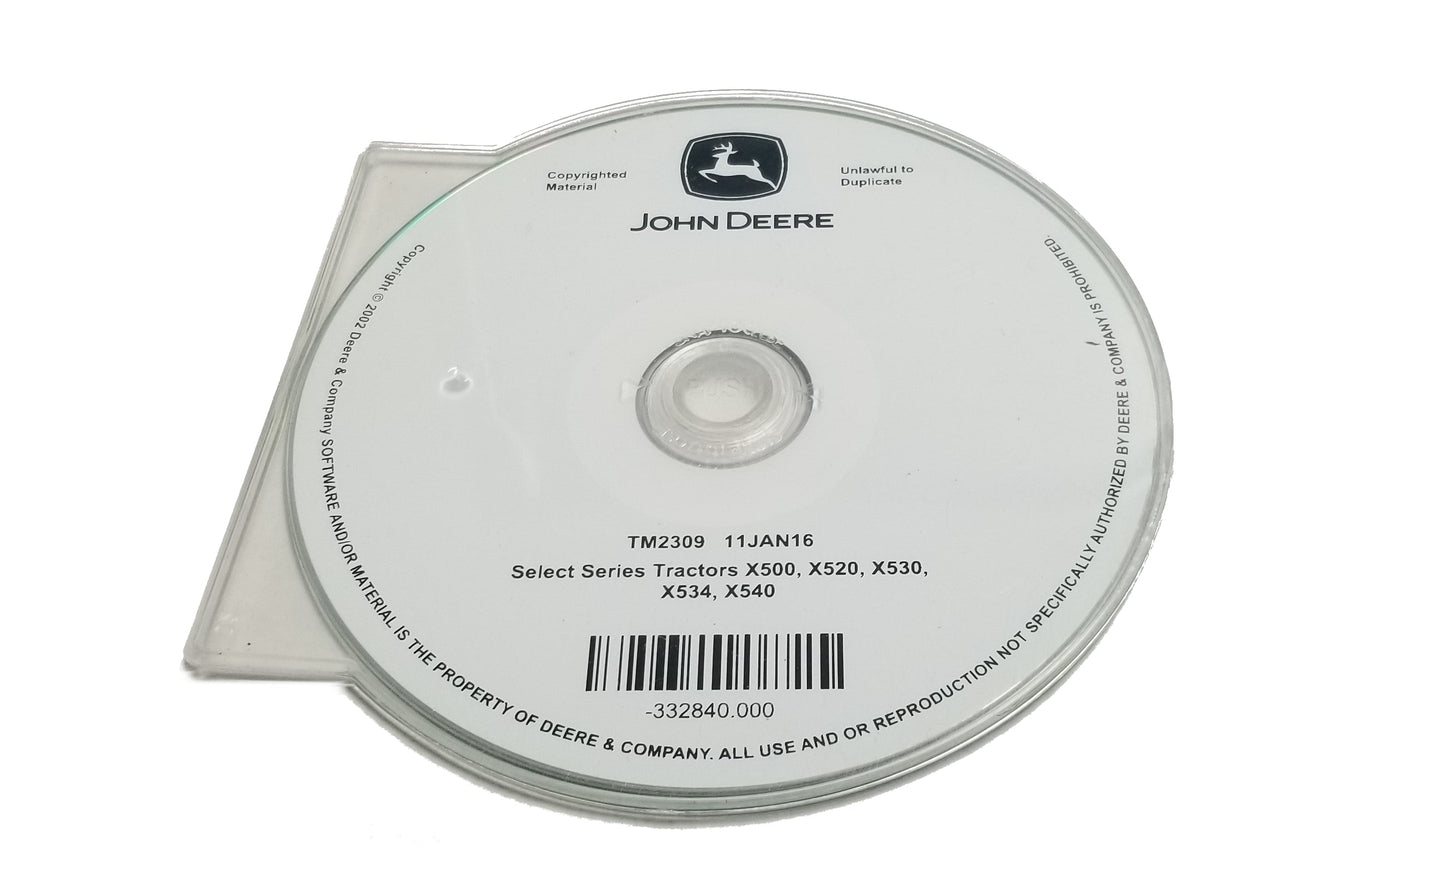 John Deere X500/X520/X530/X534/X540 Select Series Tractors Technical CD Manual - TM2309CD